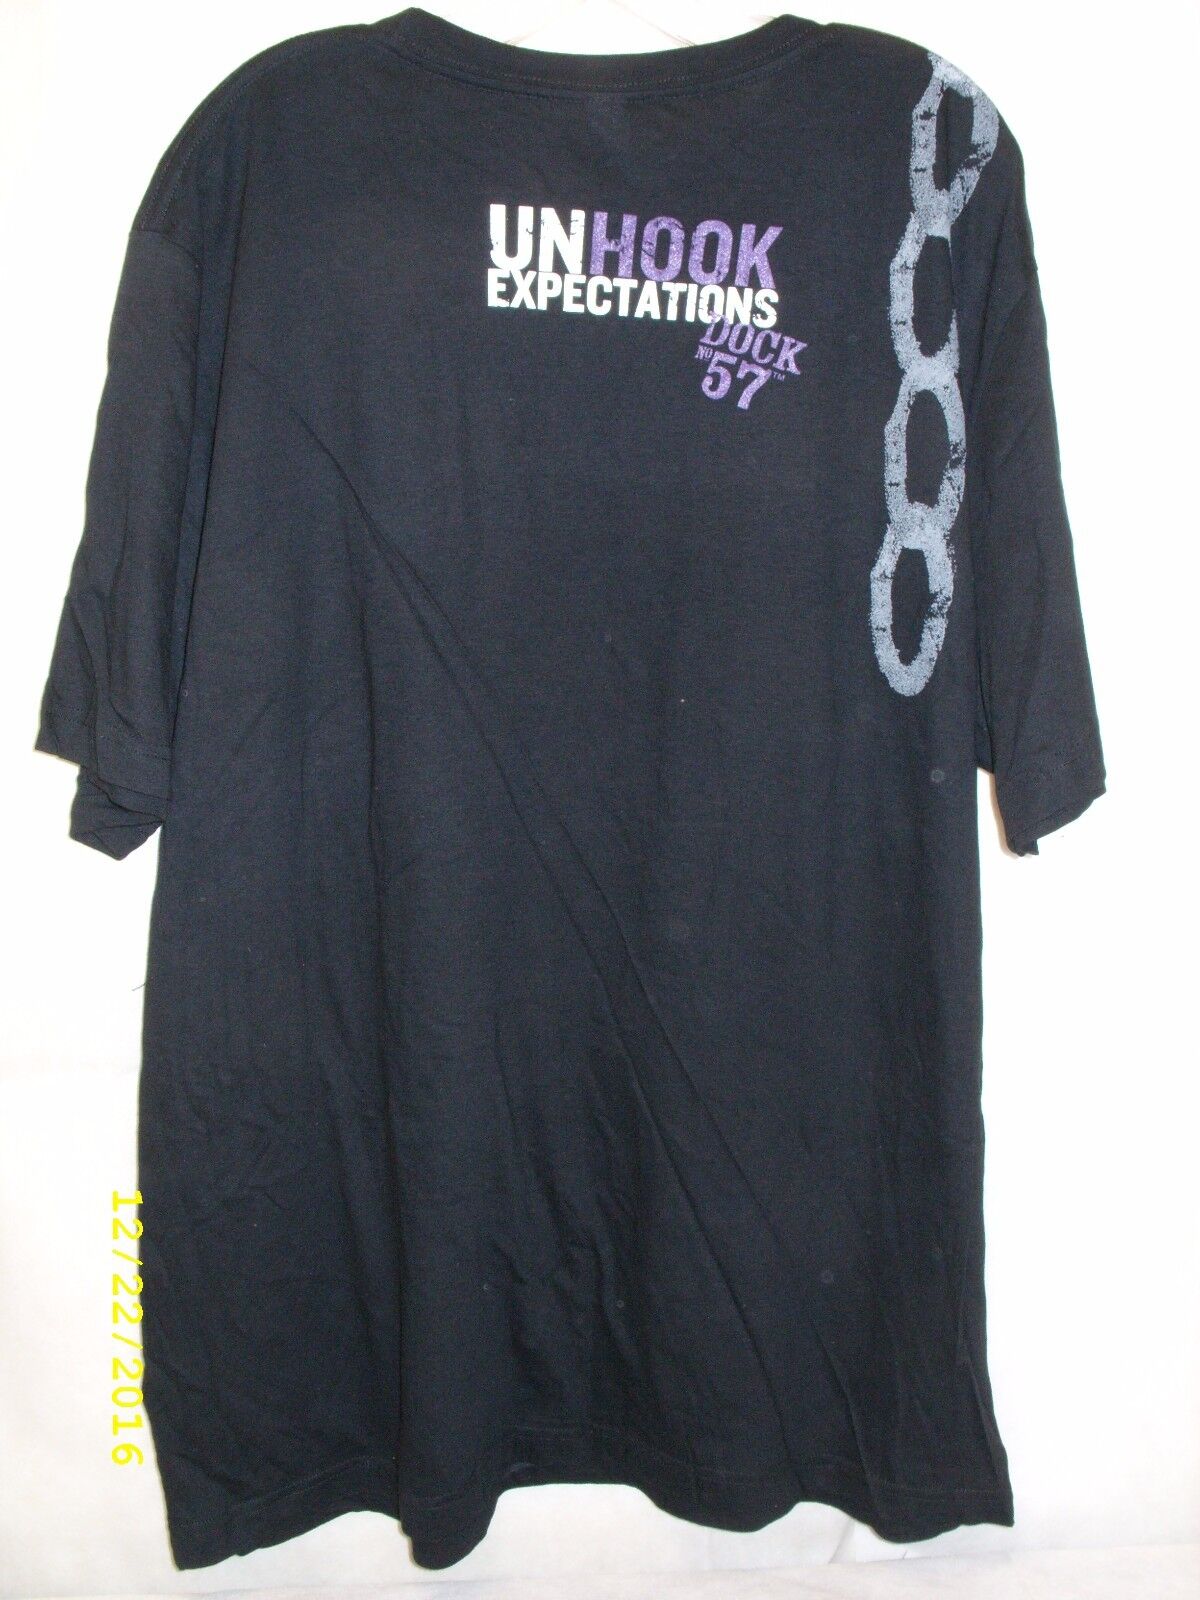 Canadian Club - Dock No. 57 Whiskey - "Unhook Expectations" Promo Mens T-Shirt Canadian Club - фотография #3